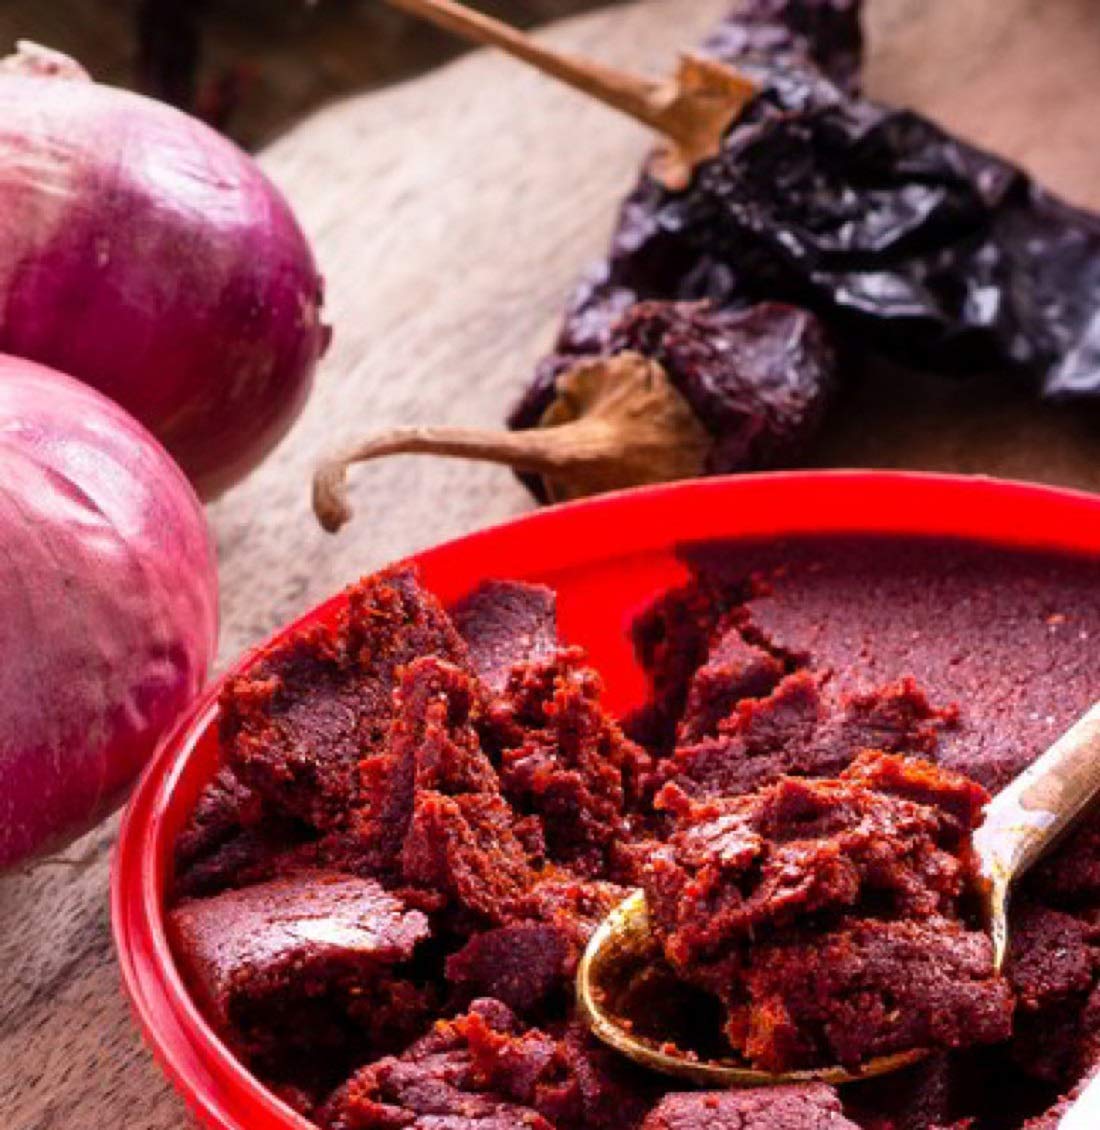 Premium Kashmiri Masala Tikki - Rich and Aromatic Spice Paste from Kashmir